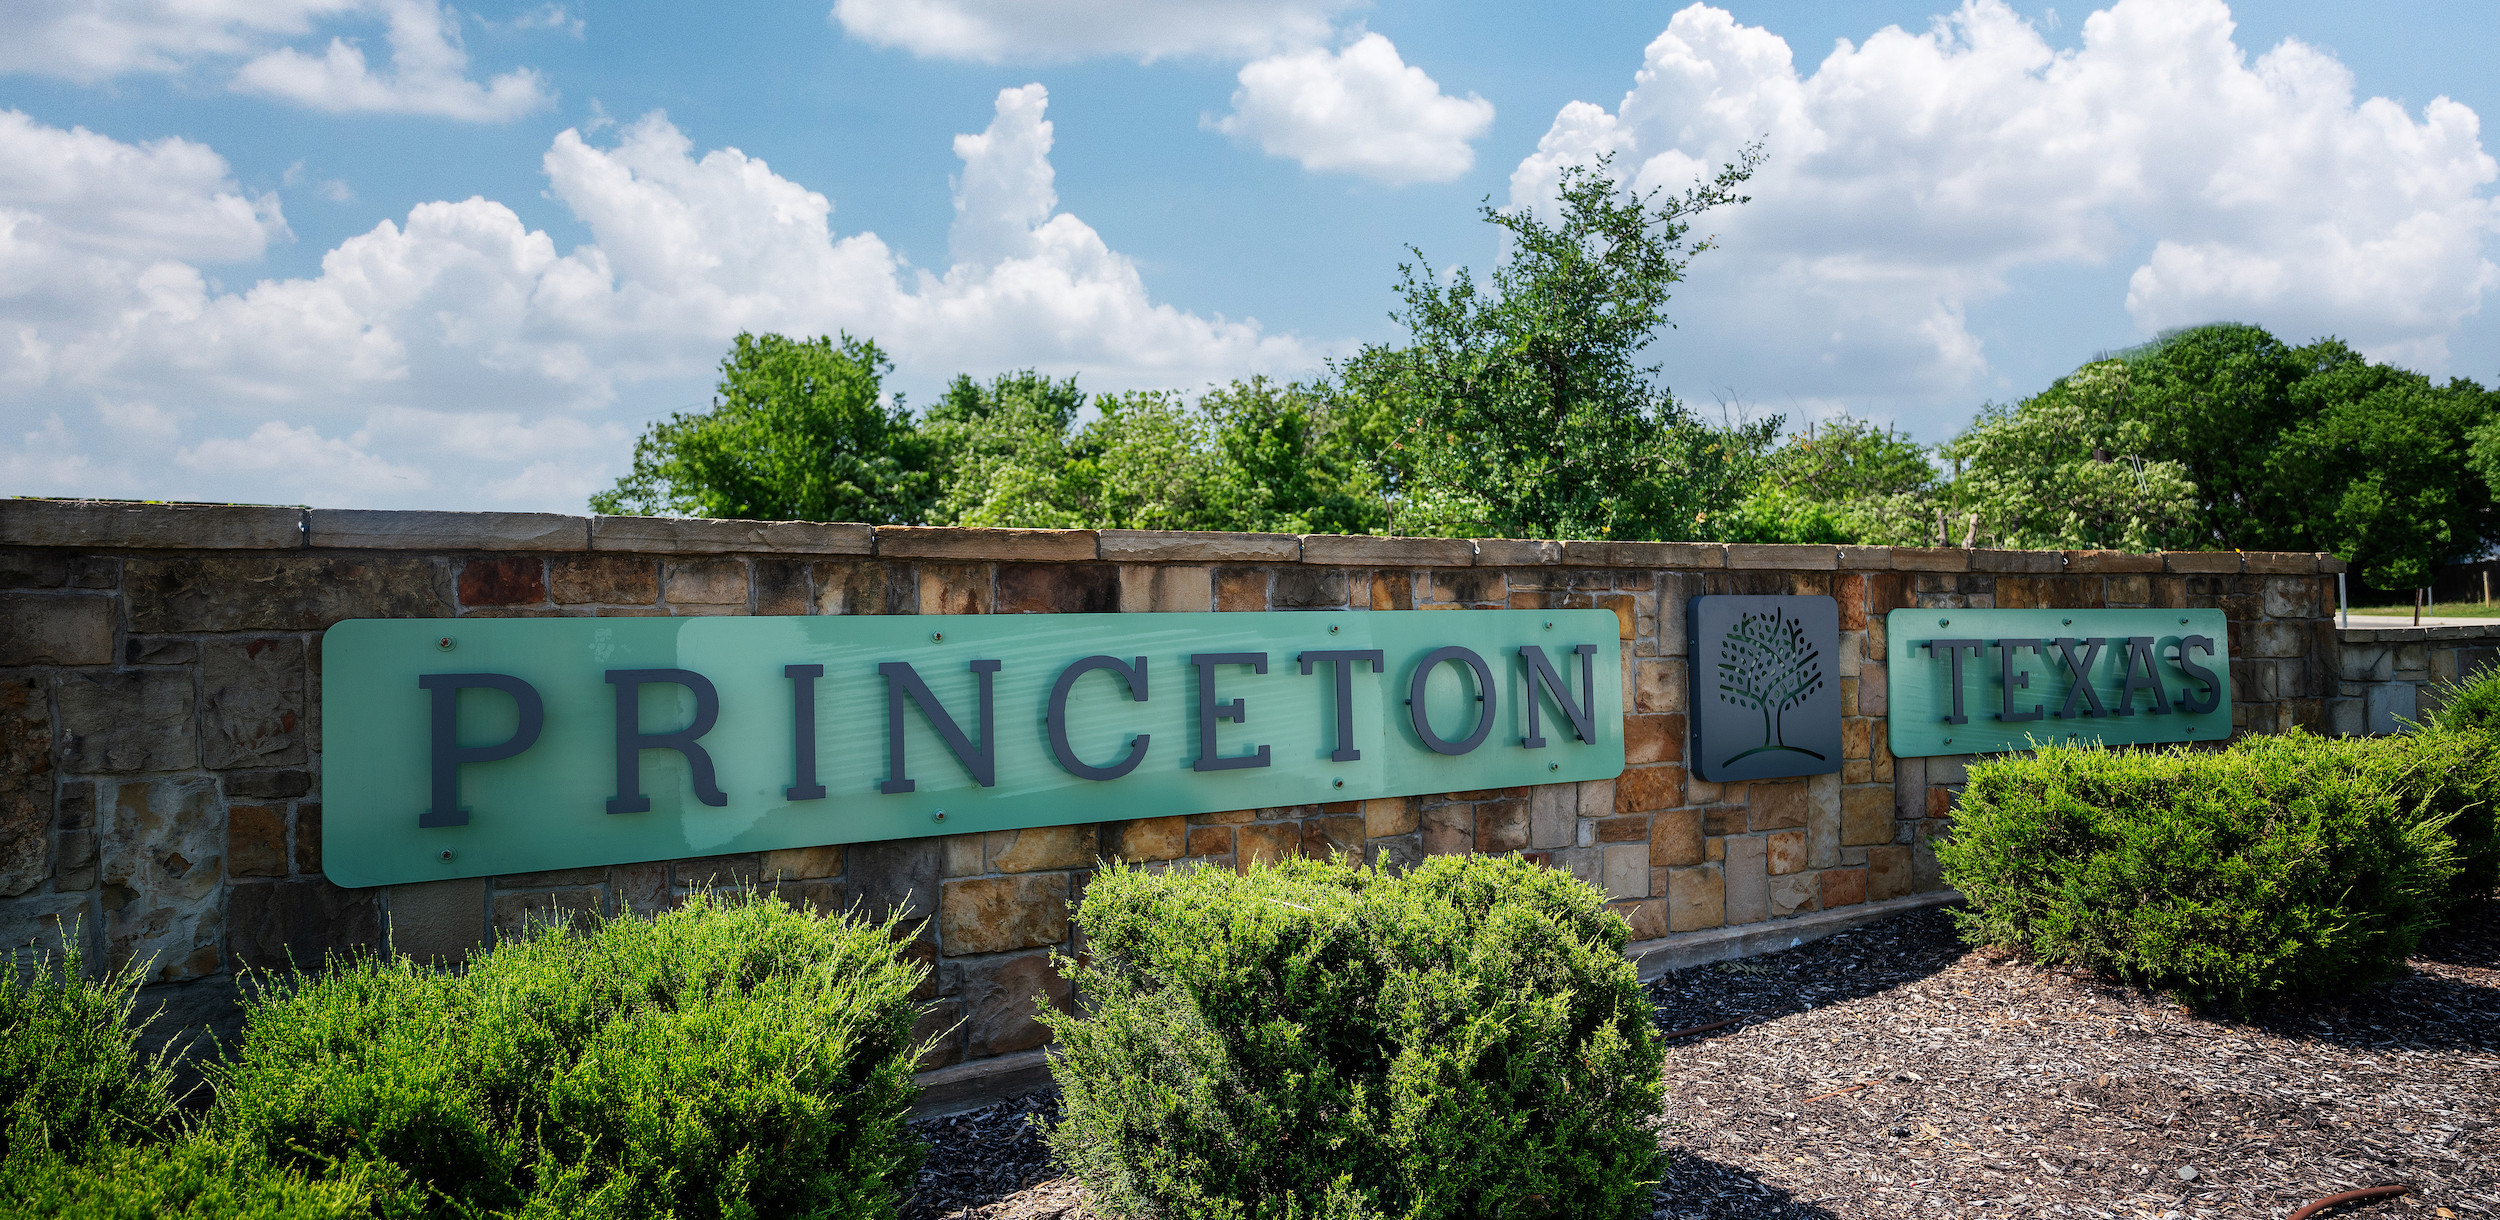 Princeton Texas sign